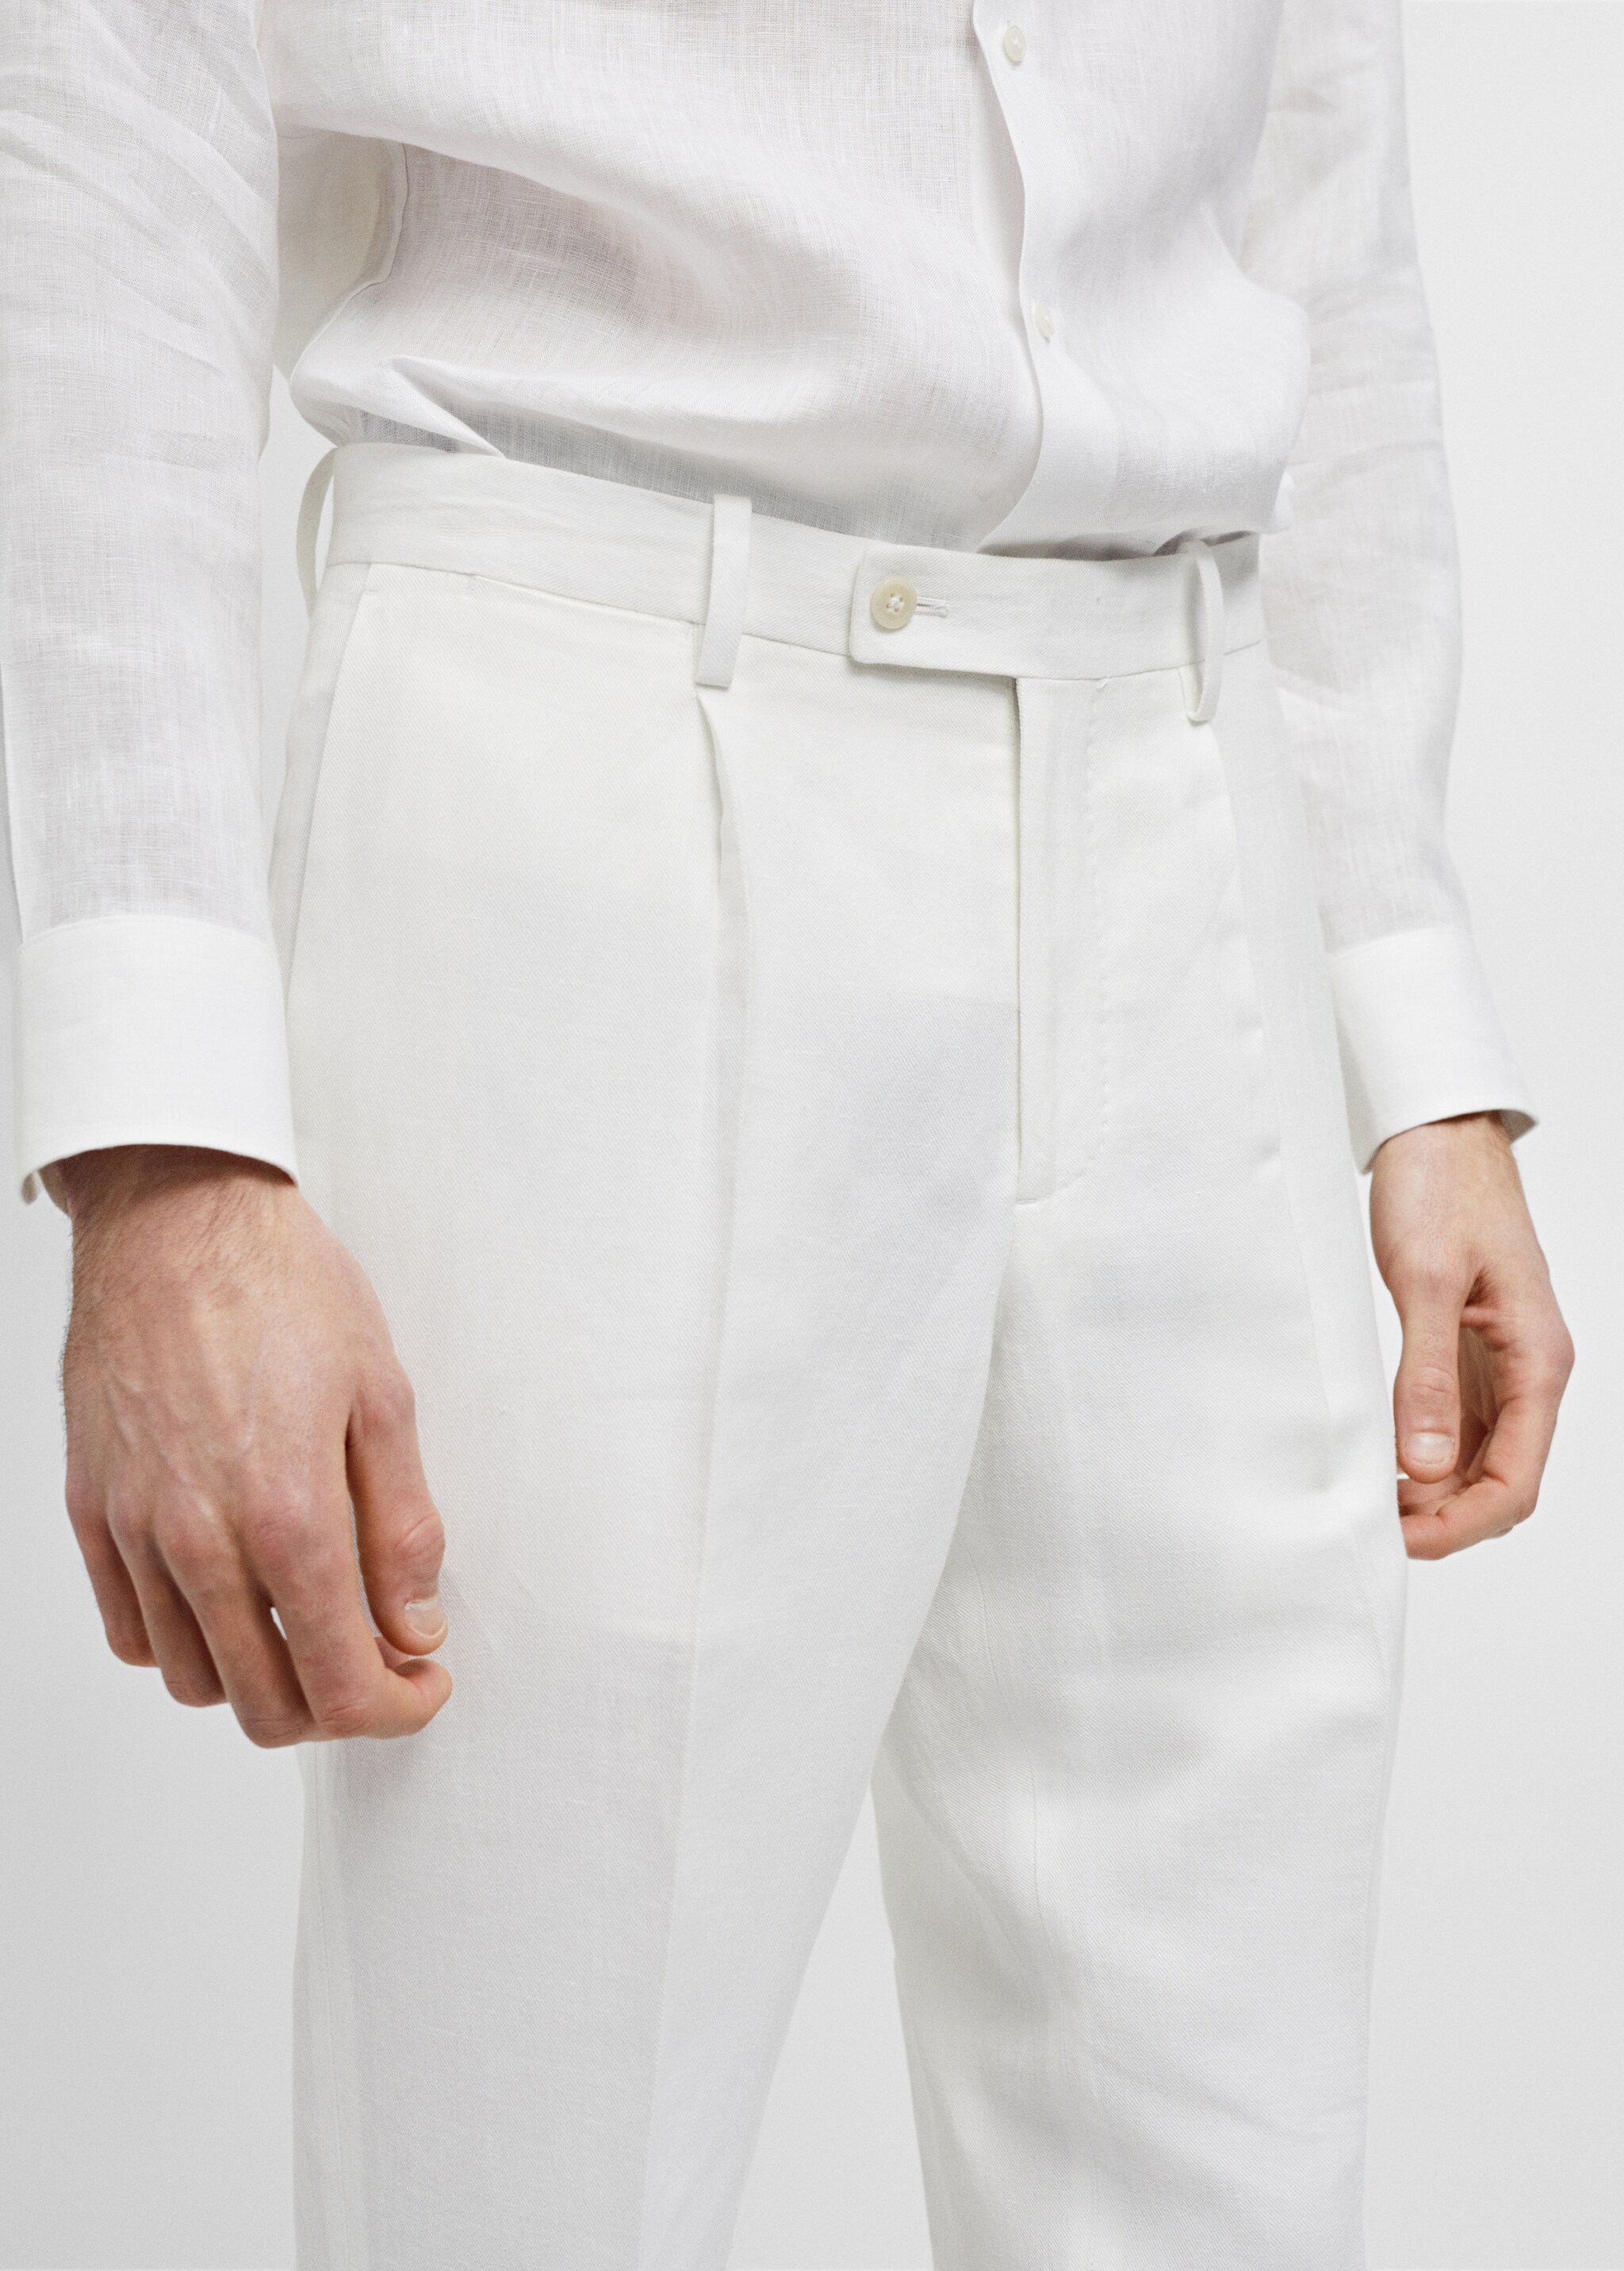 Slim fit cotton and linen suit pants - Details of the article 1